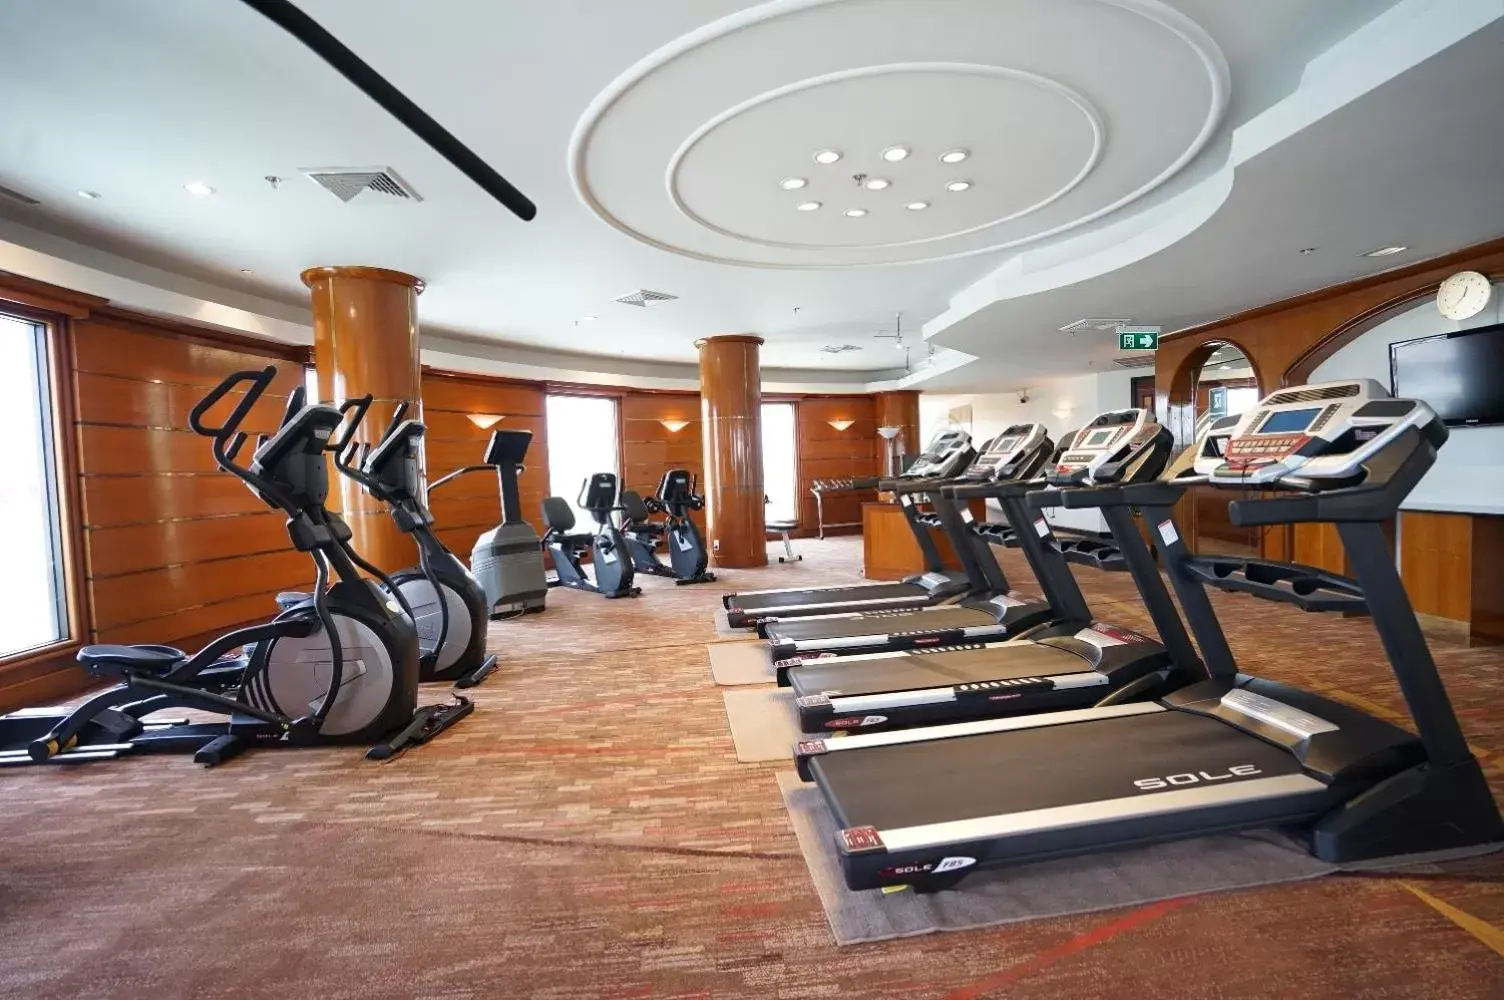 Fitness centre/facilities, Fitness Center/Facilities in Amari Don Muang Airport Bangkok